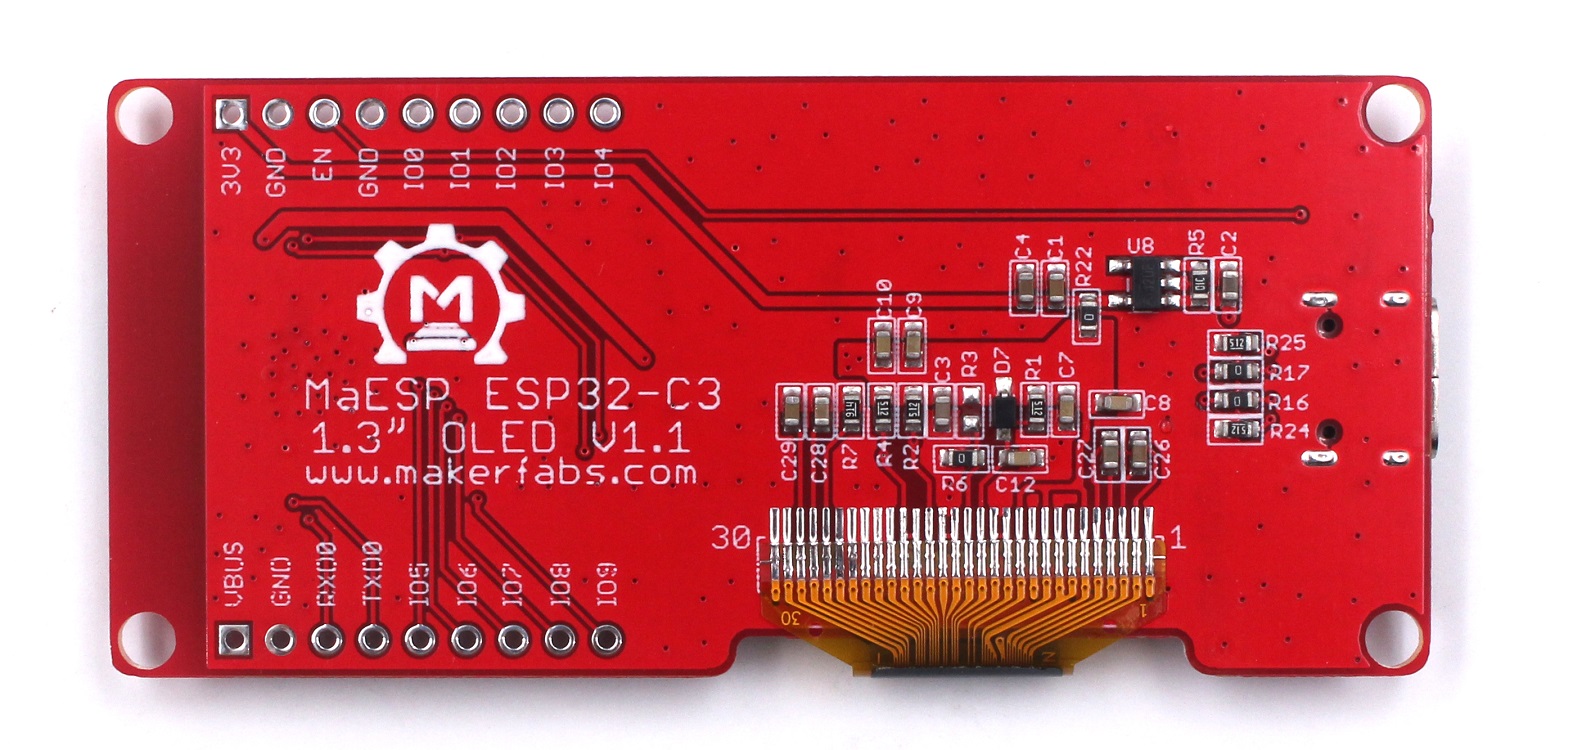 MaESP ESP32 Starter Kit / Develop Kit